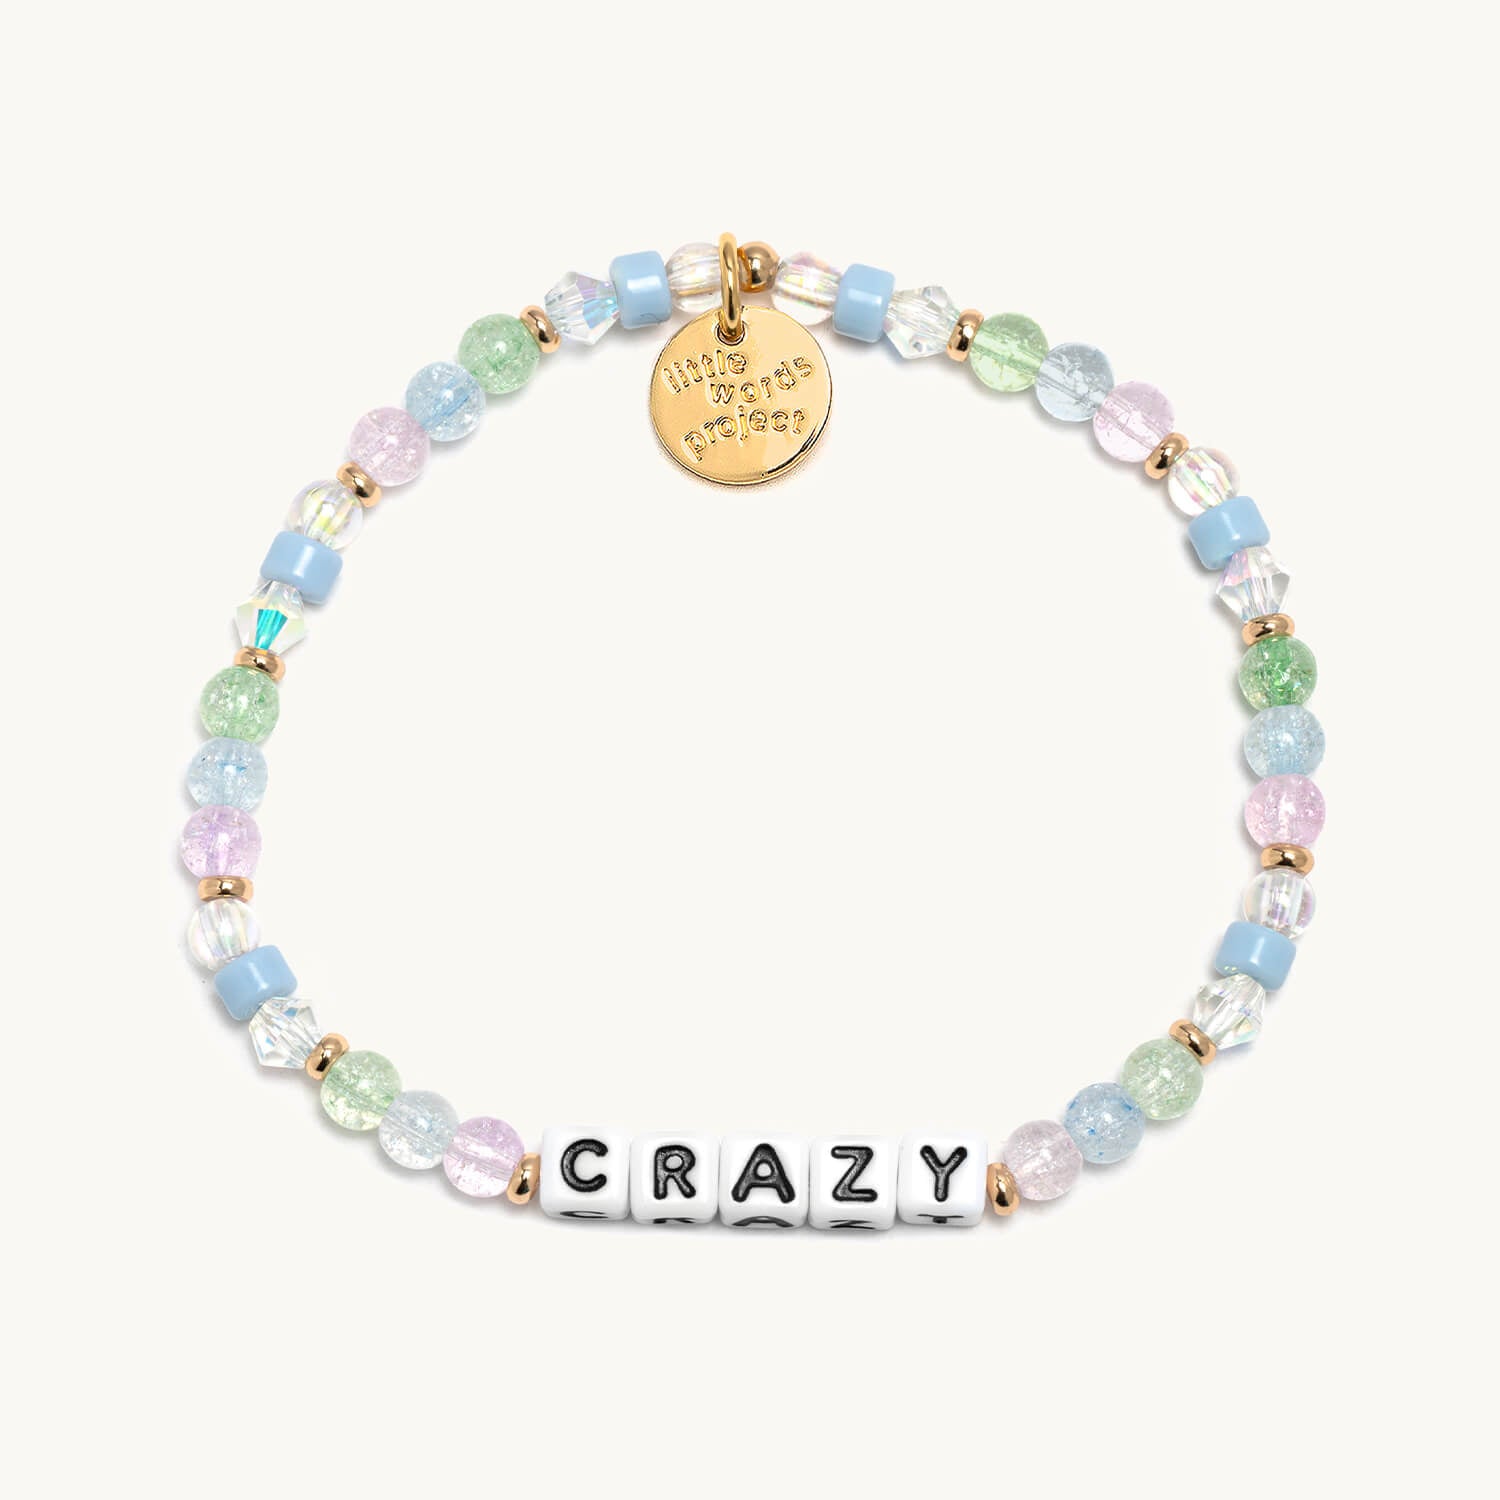 Crazy- Women's History Month Bracelet